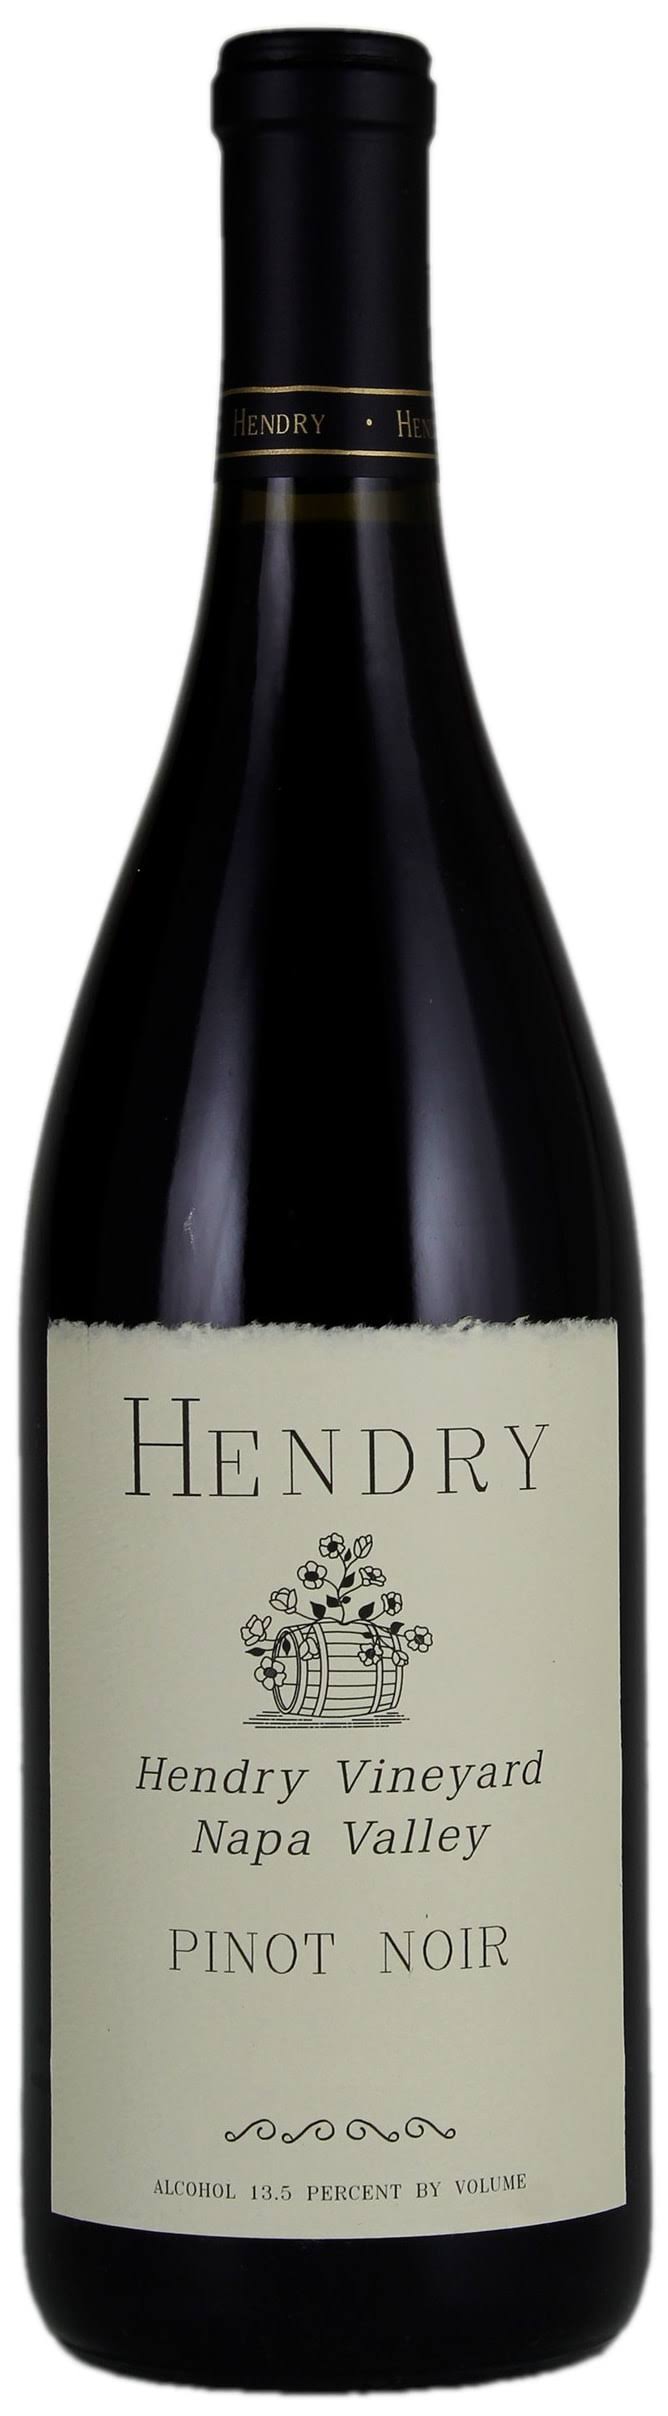 Hendry HRW Pinot Noir 2017 Red Wine from California - 750ml